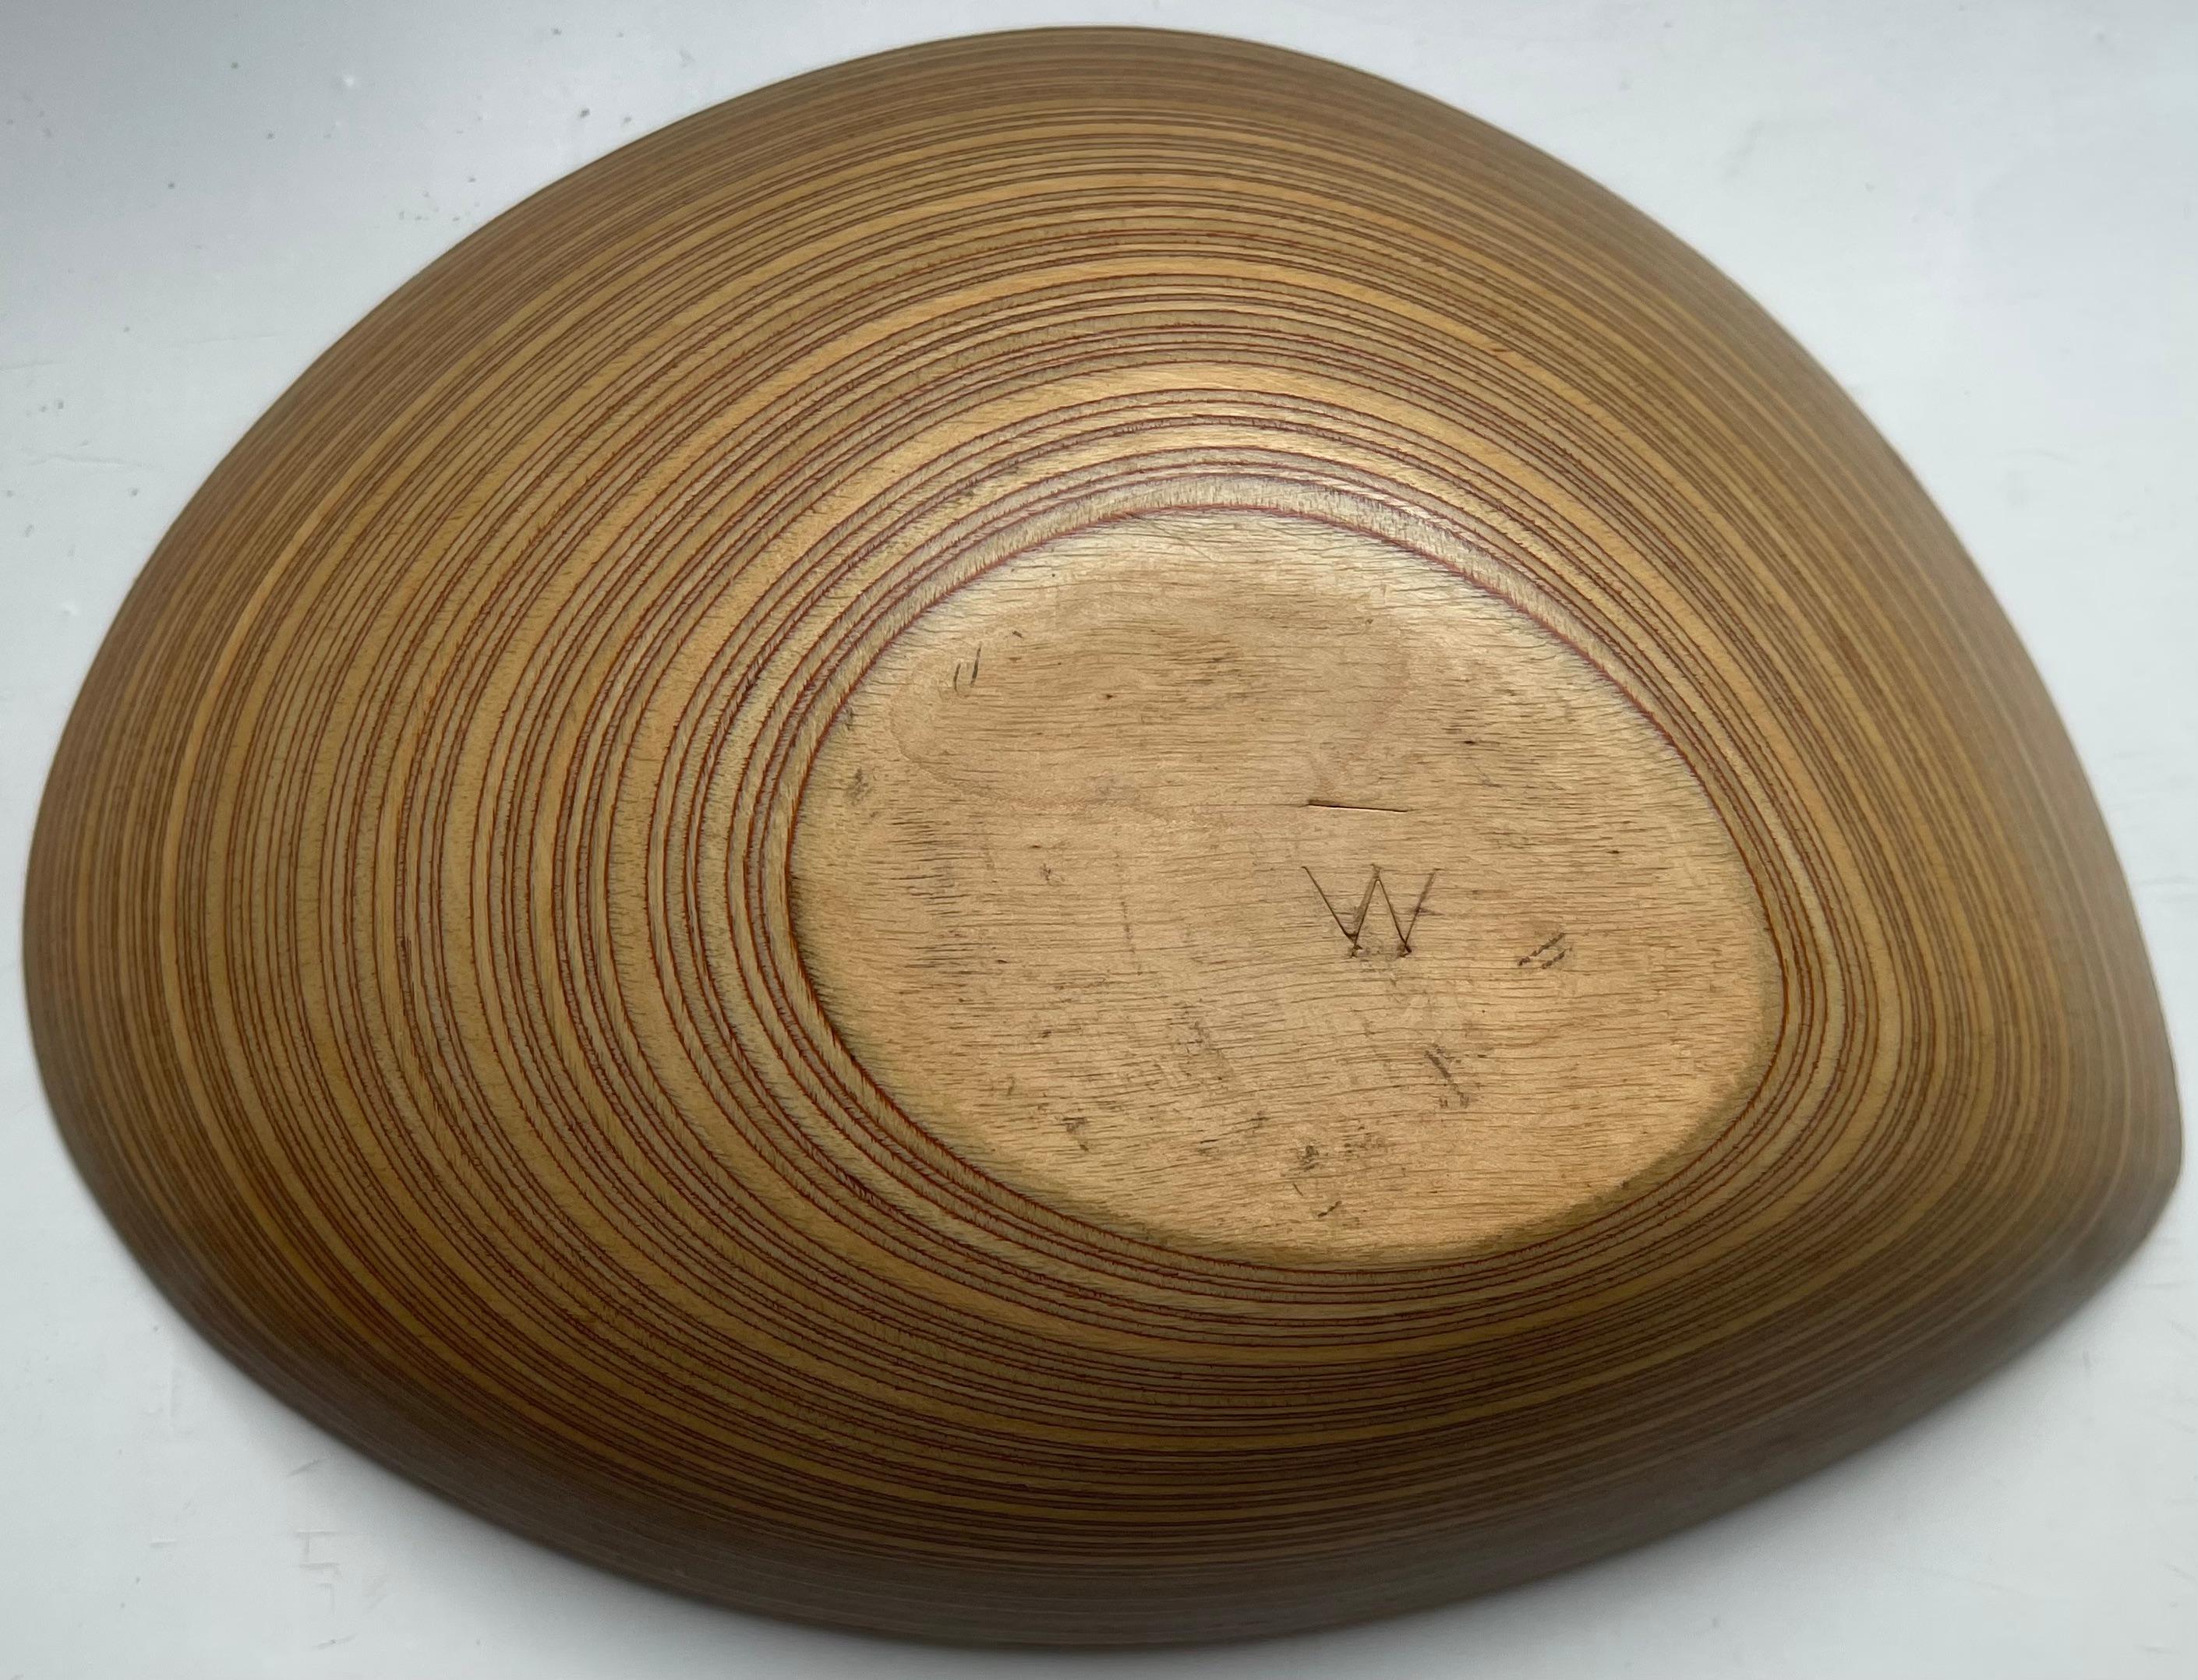 iconic tapio wirkkala rythmic wood leaf In Good Condition For Sale In Munich, DE